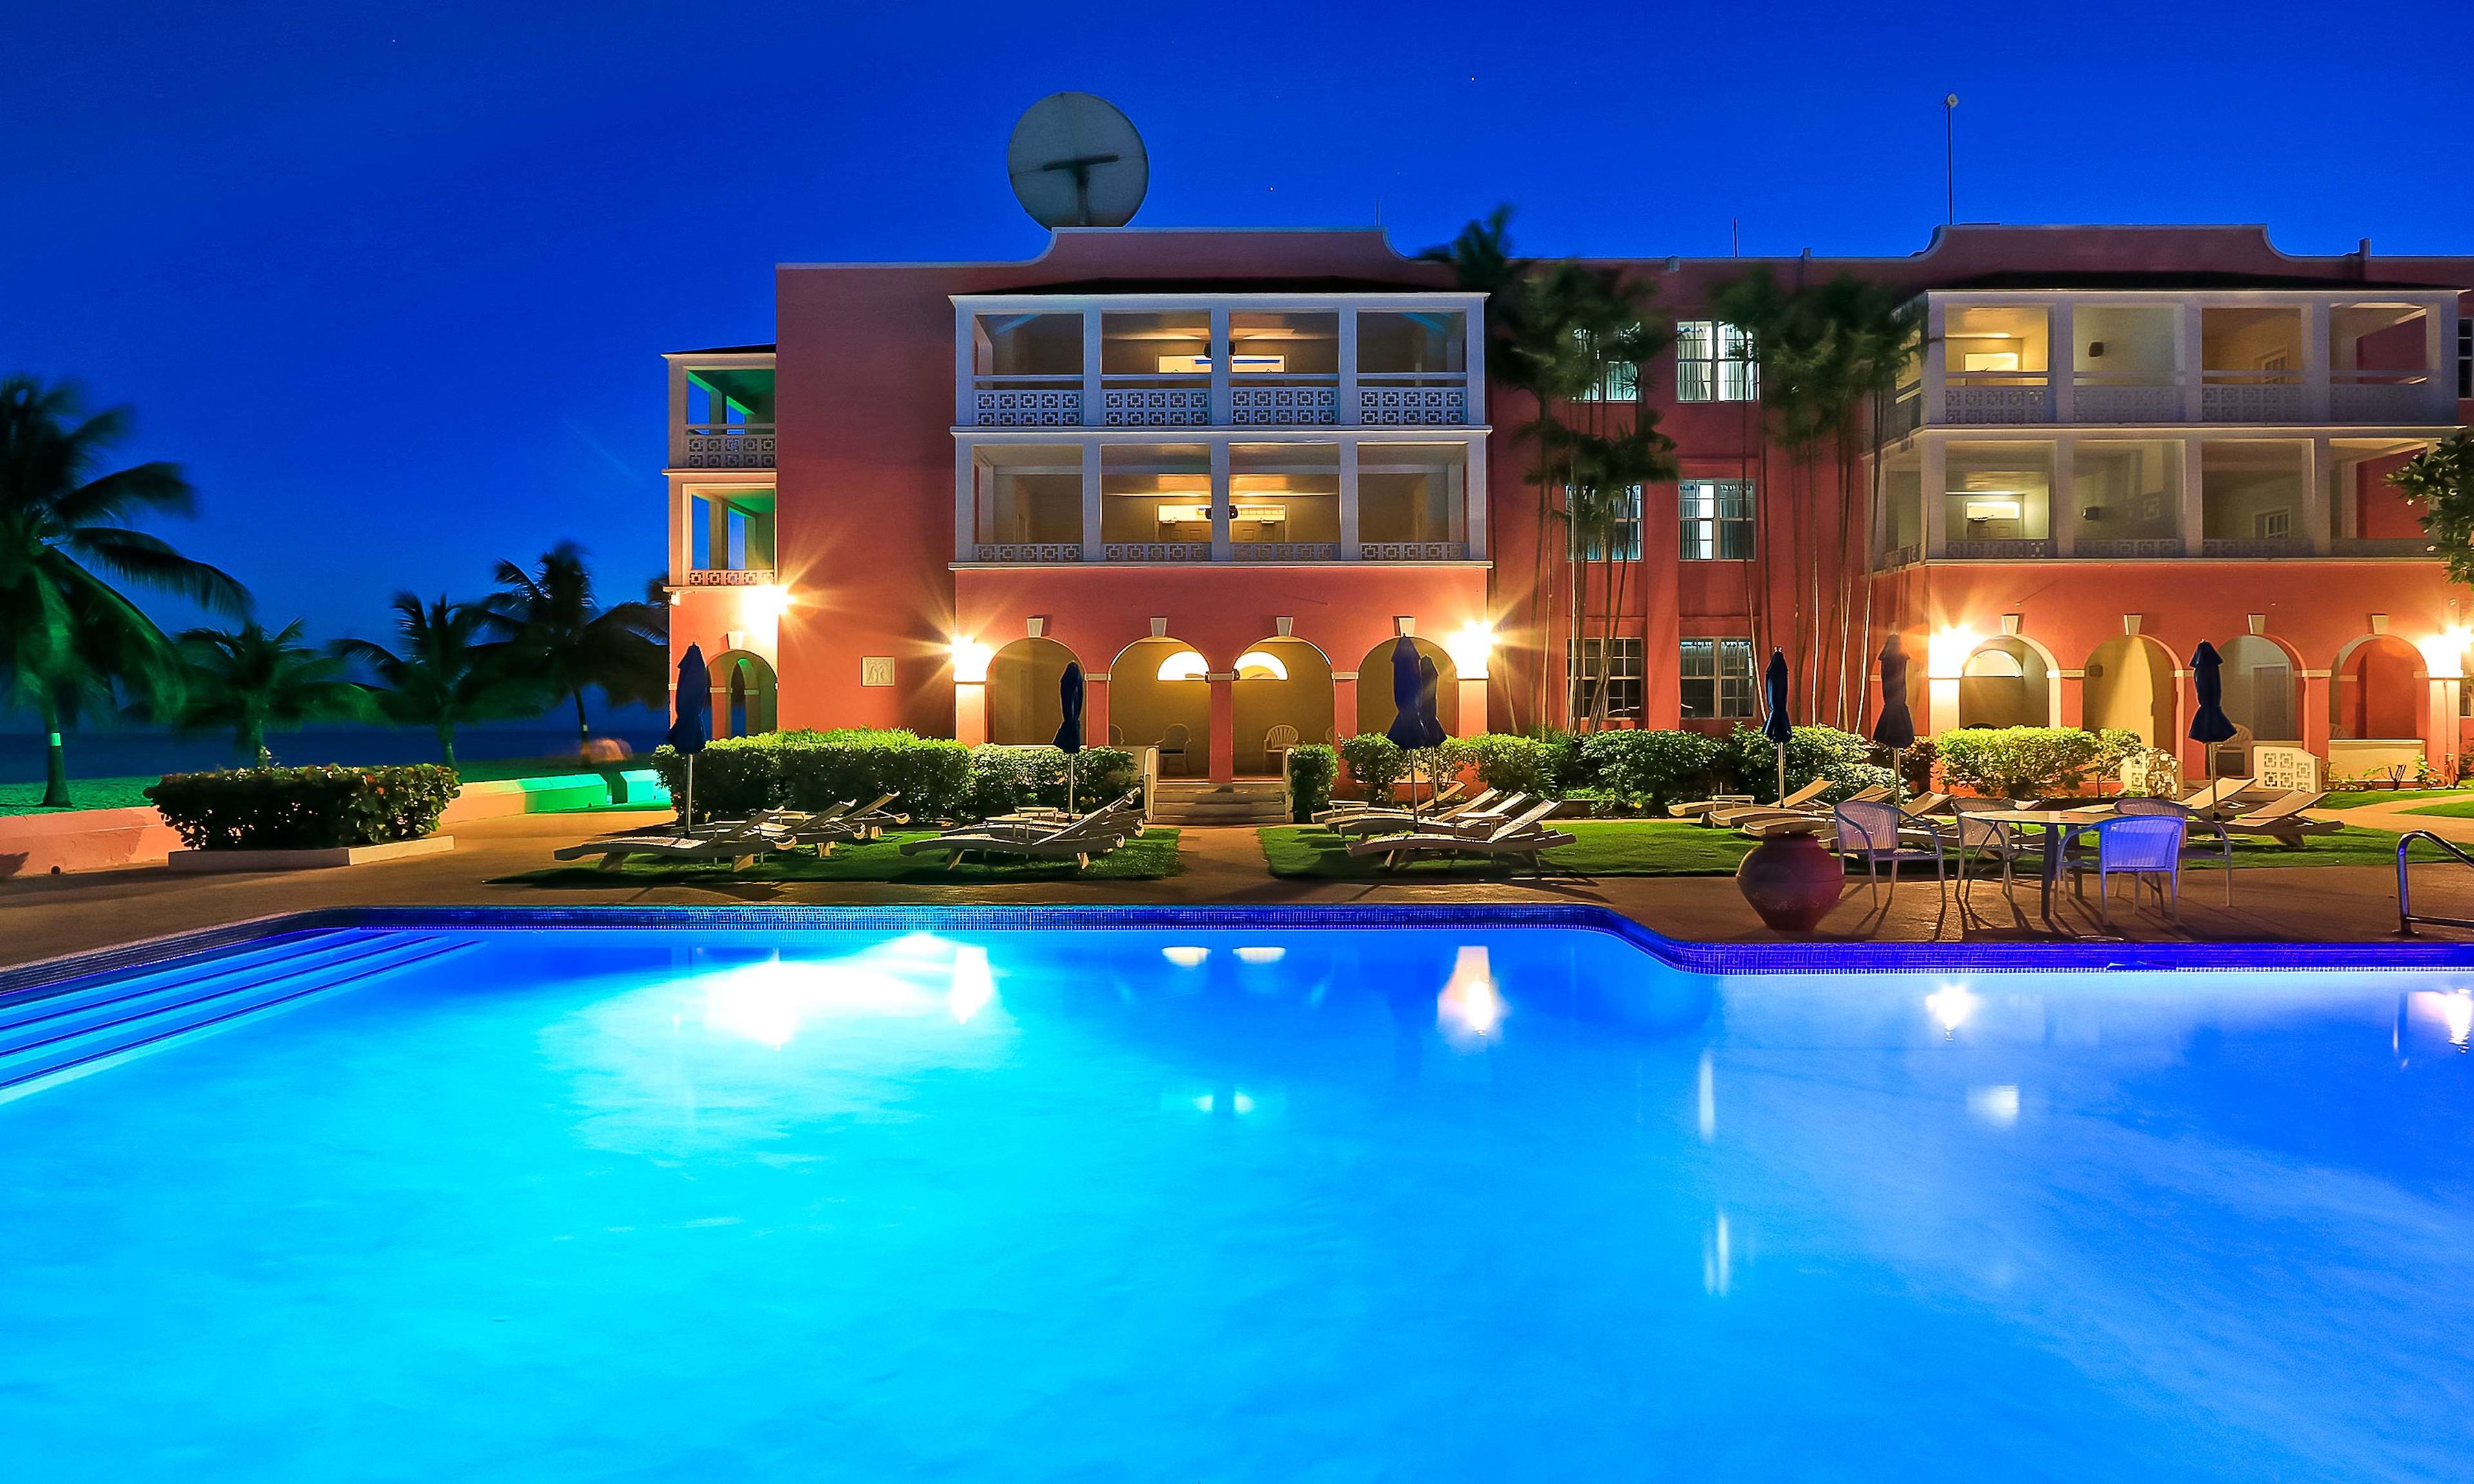 Southern Palms Beach Club & Resort Hotel